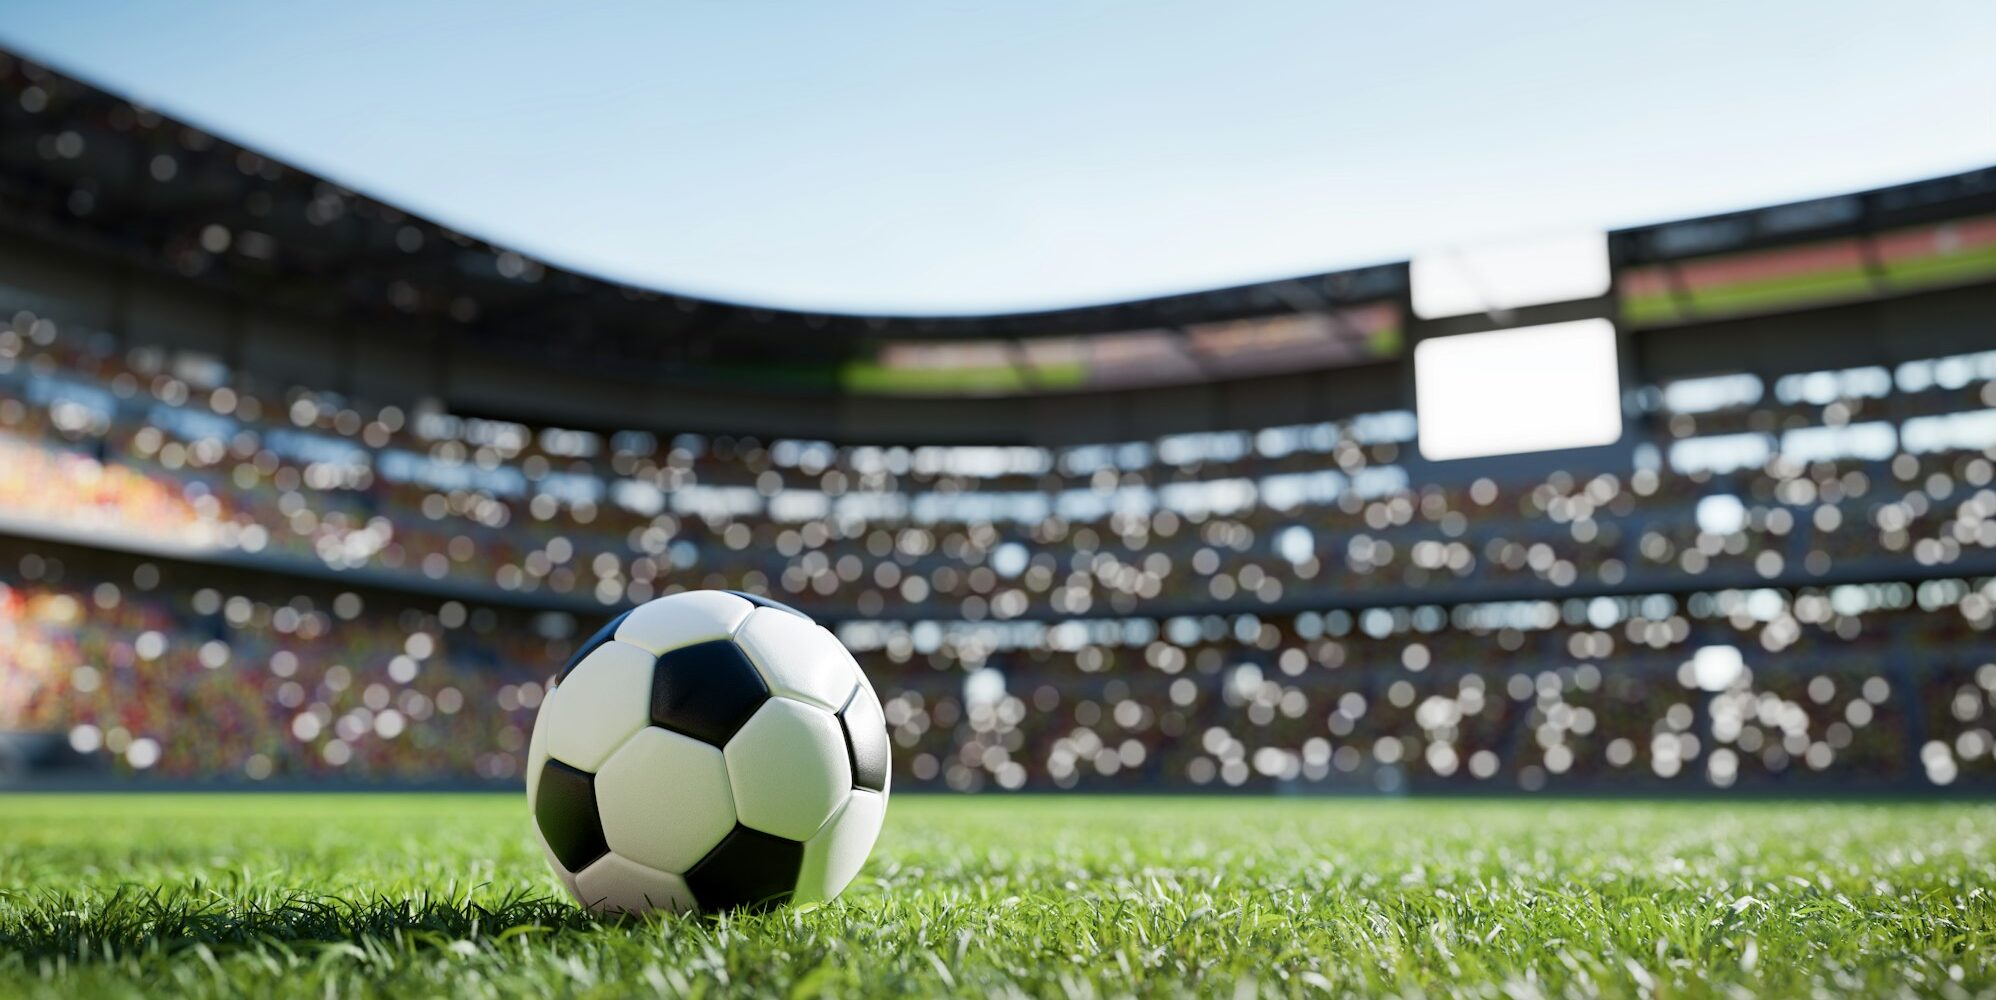 Football soccer ball on grass field on stadium